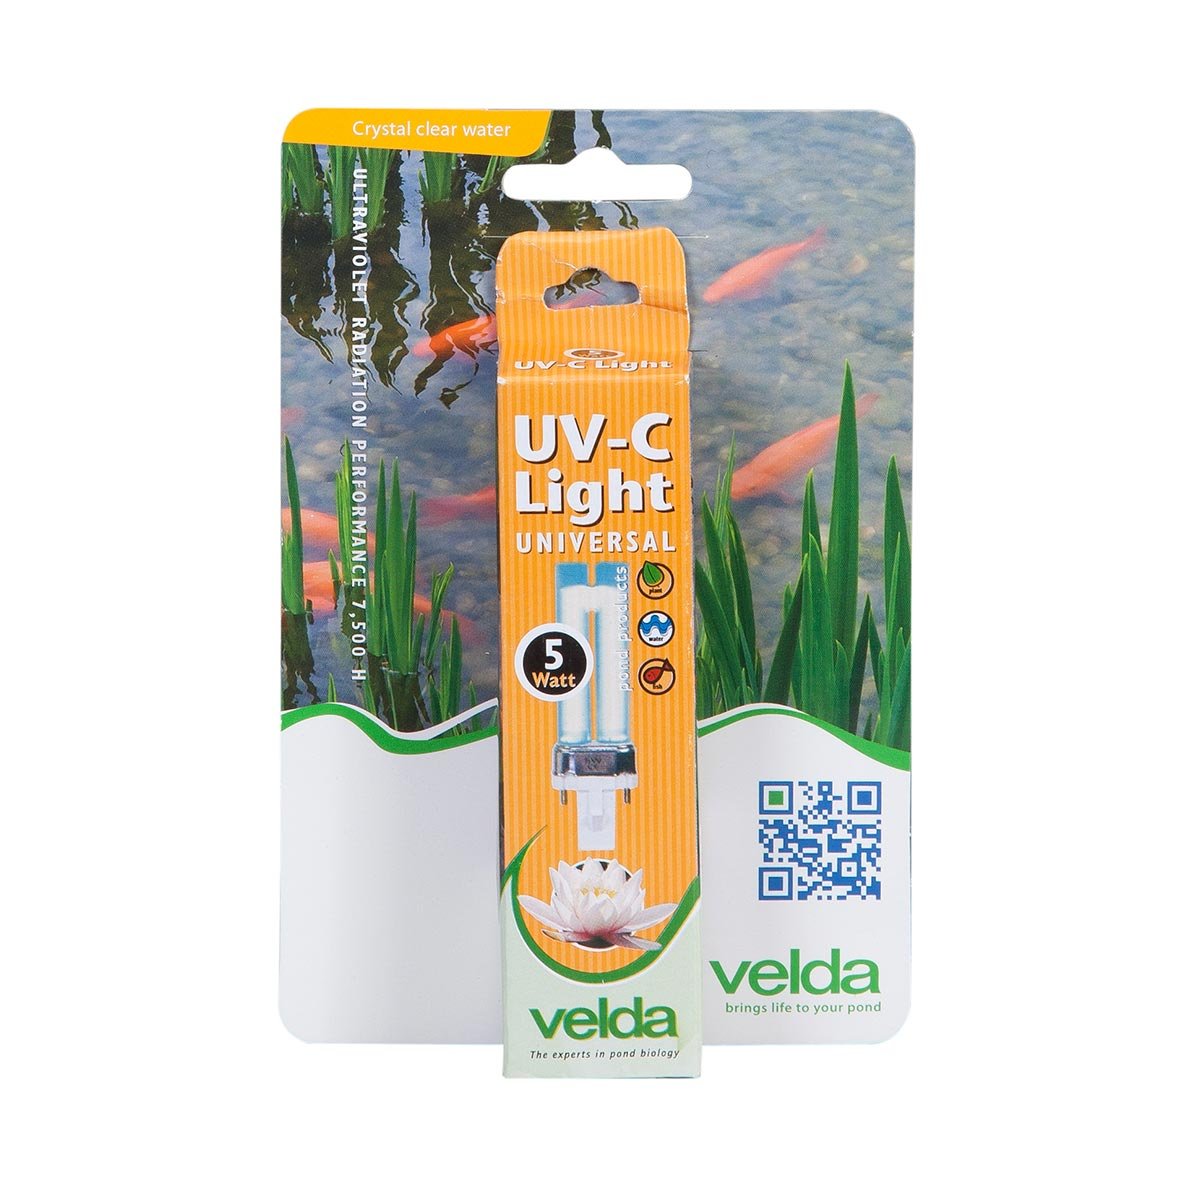 Velda UV-C PL Lampe 5 Watt von Velda